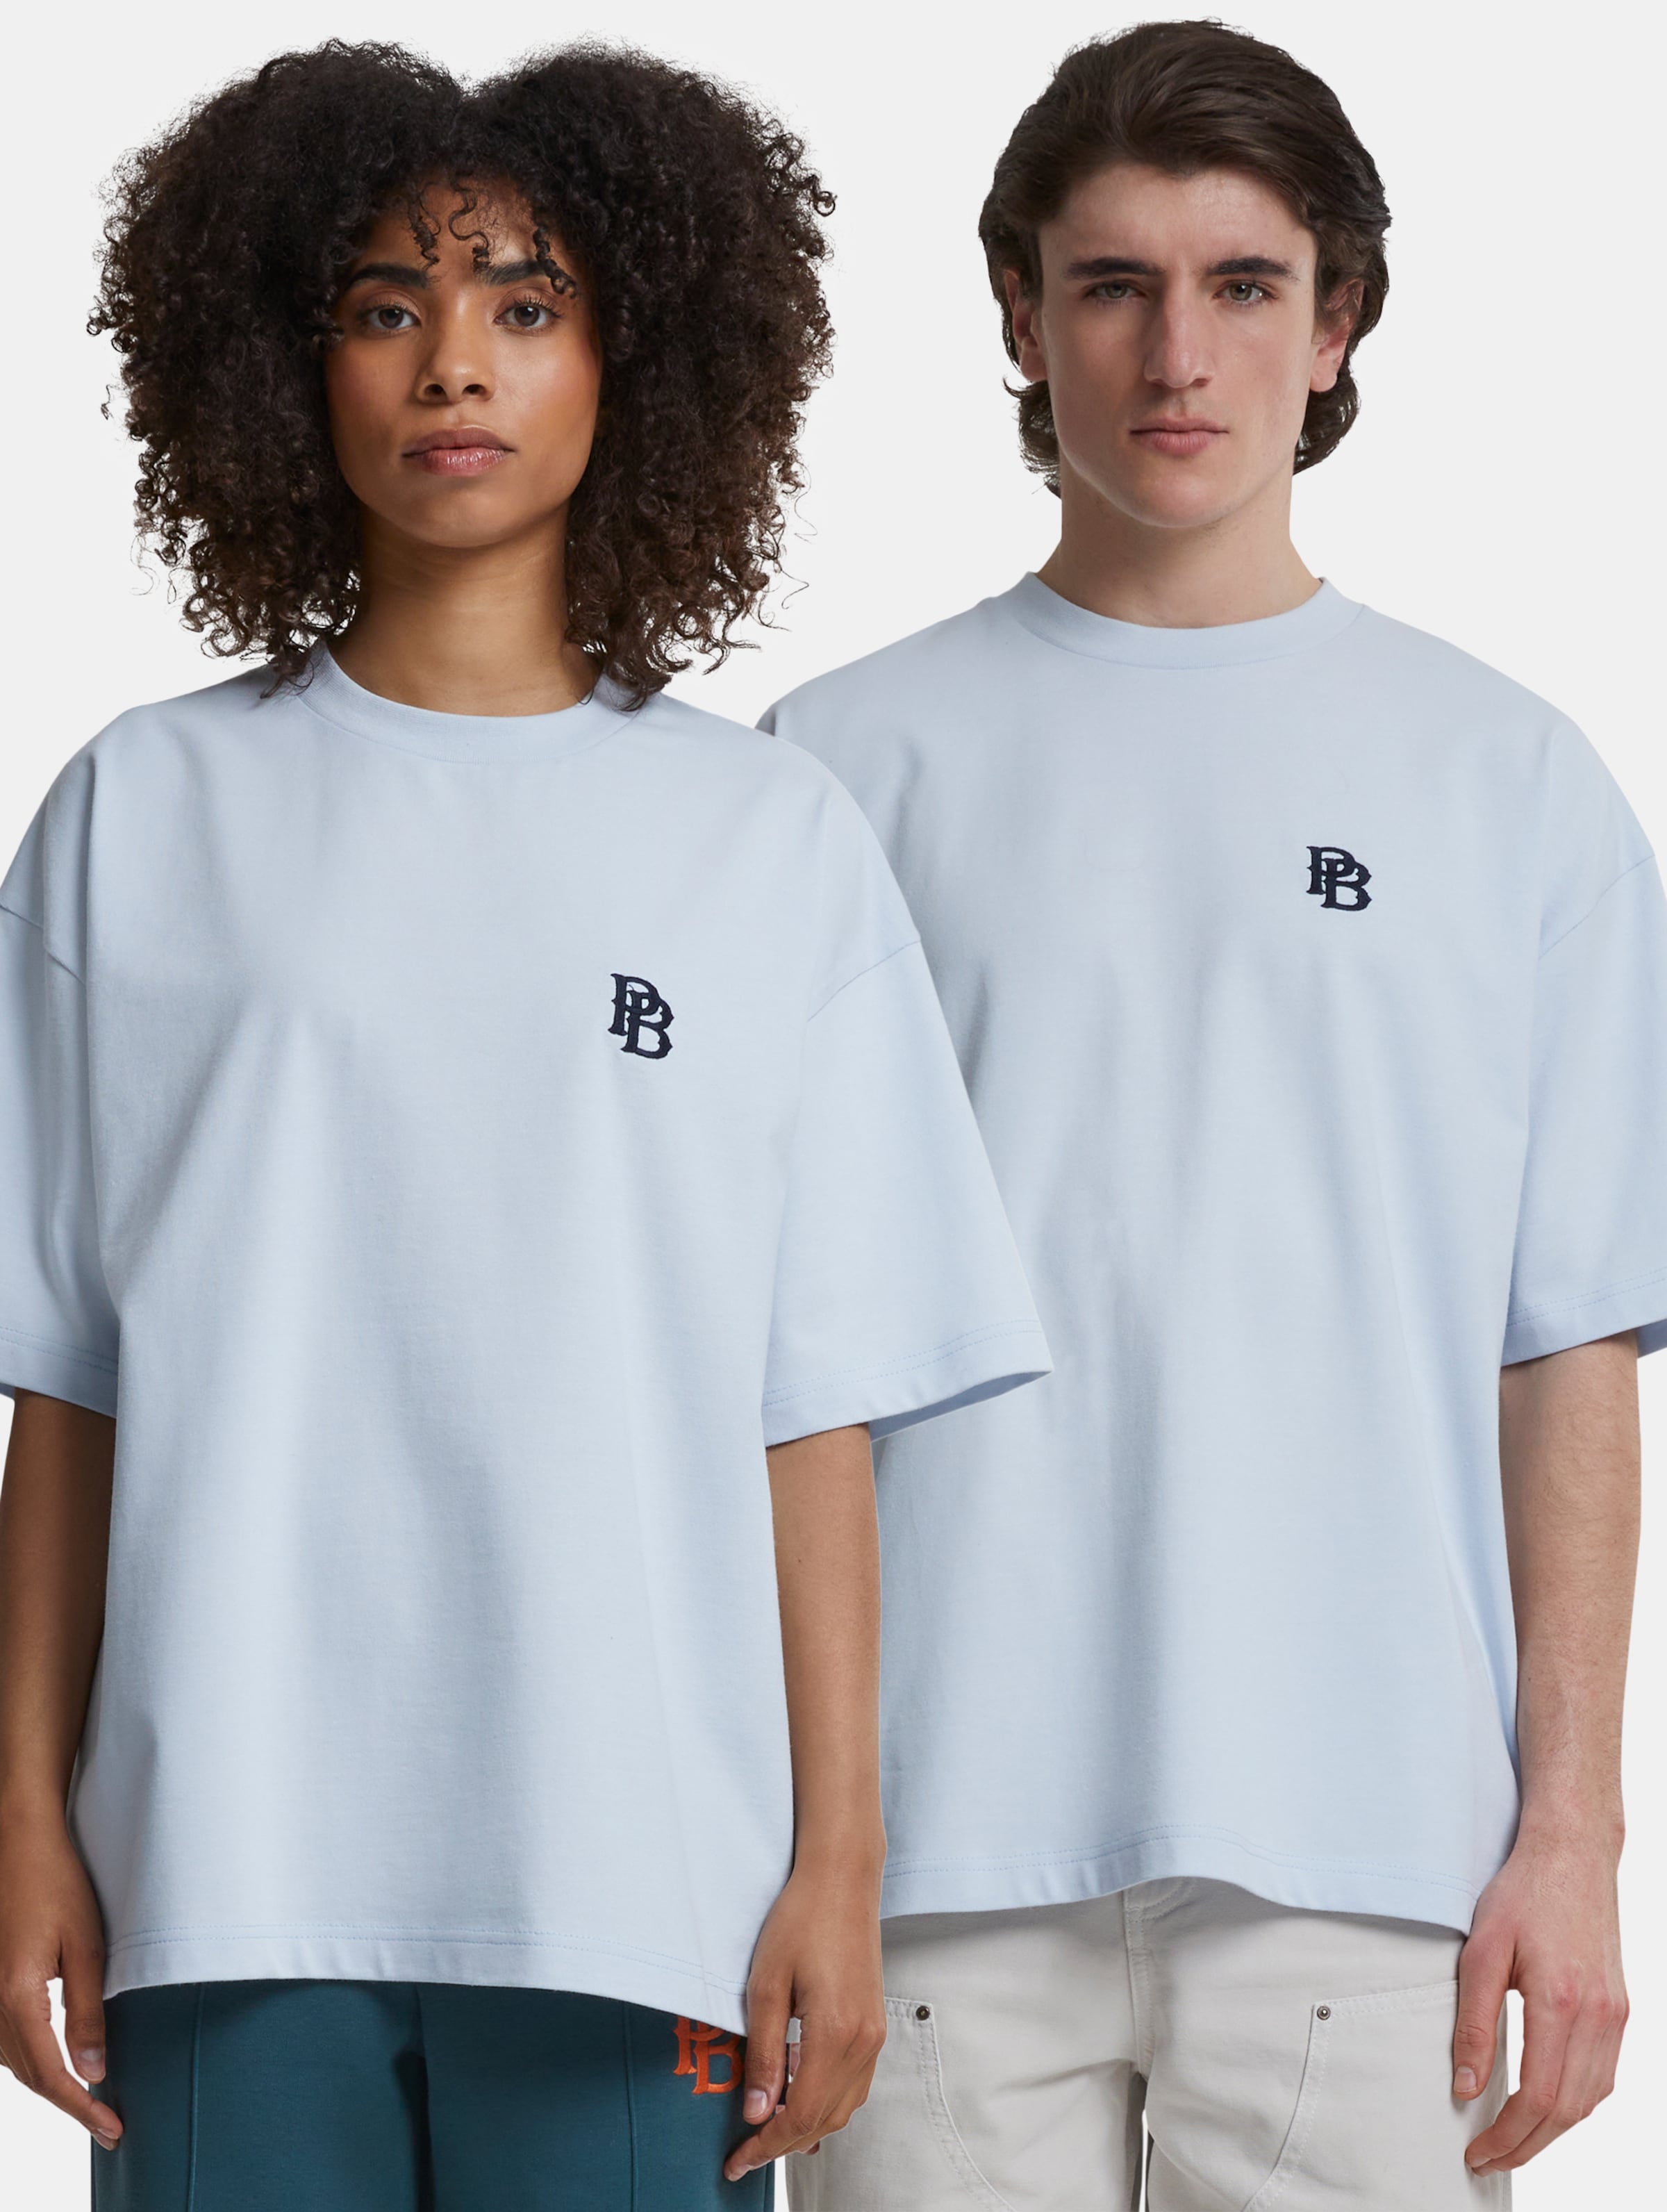 Prohibited Pitch T-Shirts Frauen,Männer,Unisex op kleur blauw, Maat S